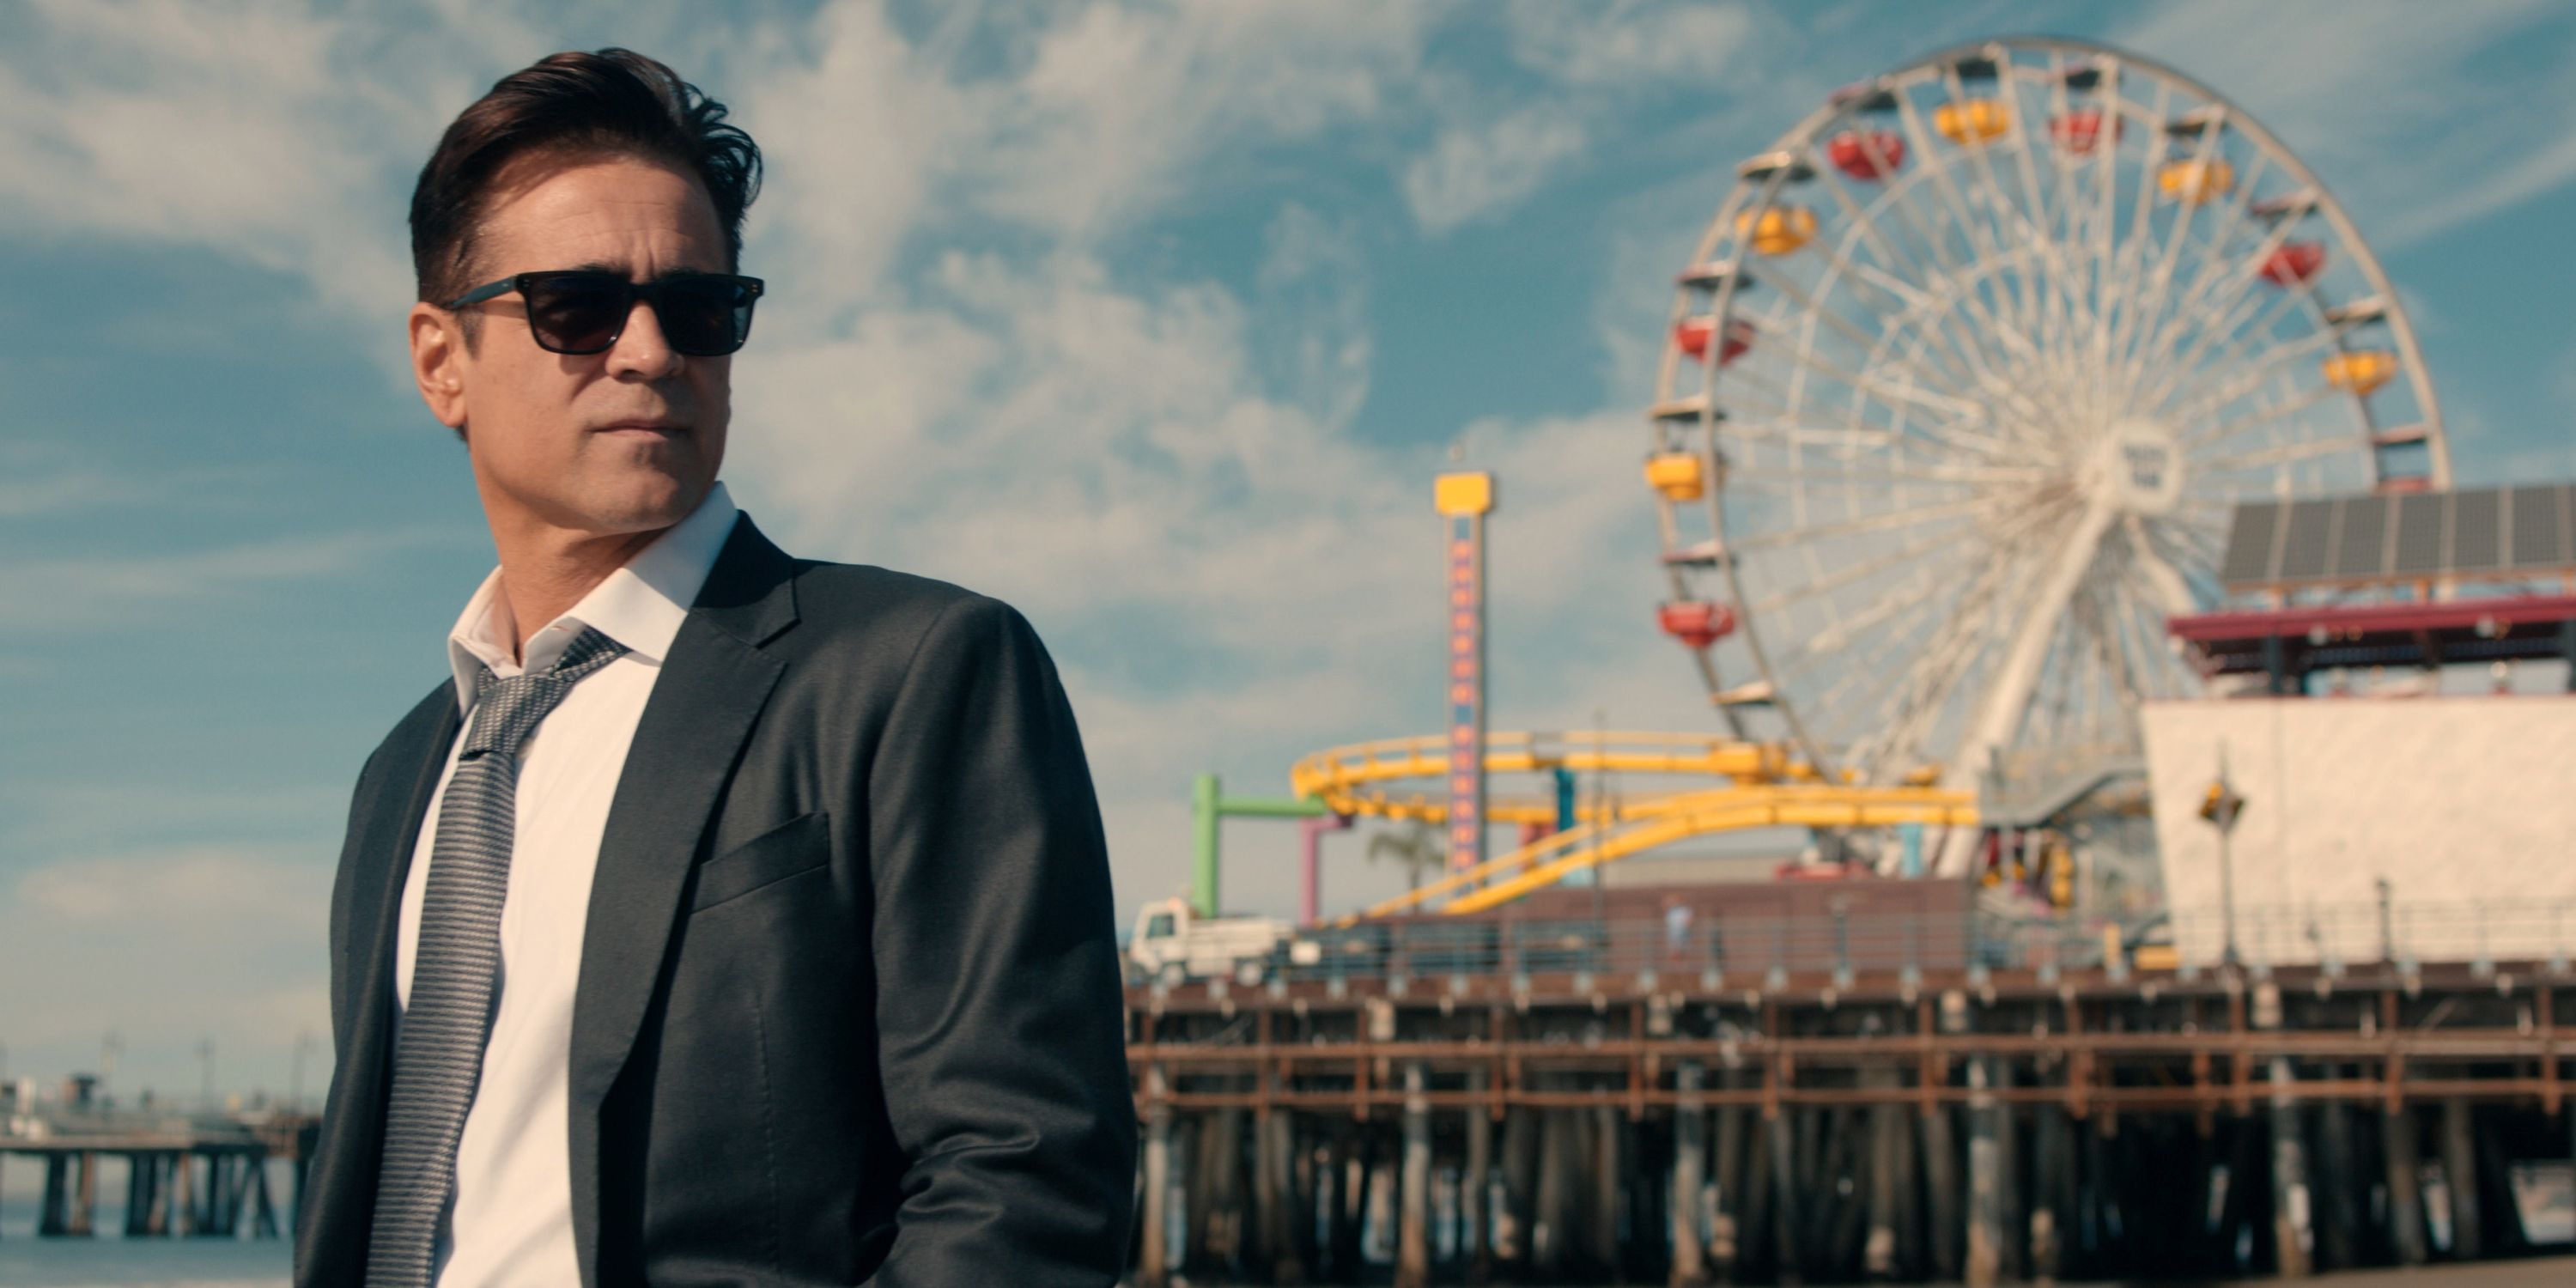 Colin Farrell as John Sugar next to the Santa Monica pier and Ferris wheel in Episode 8 of Season 1 of Sugar